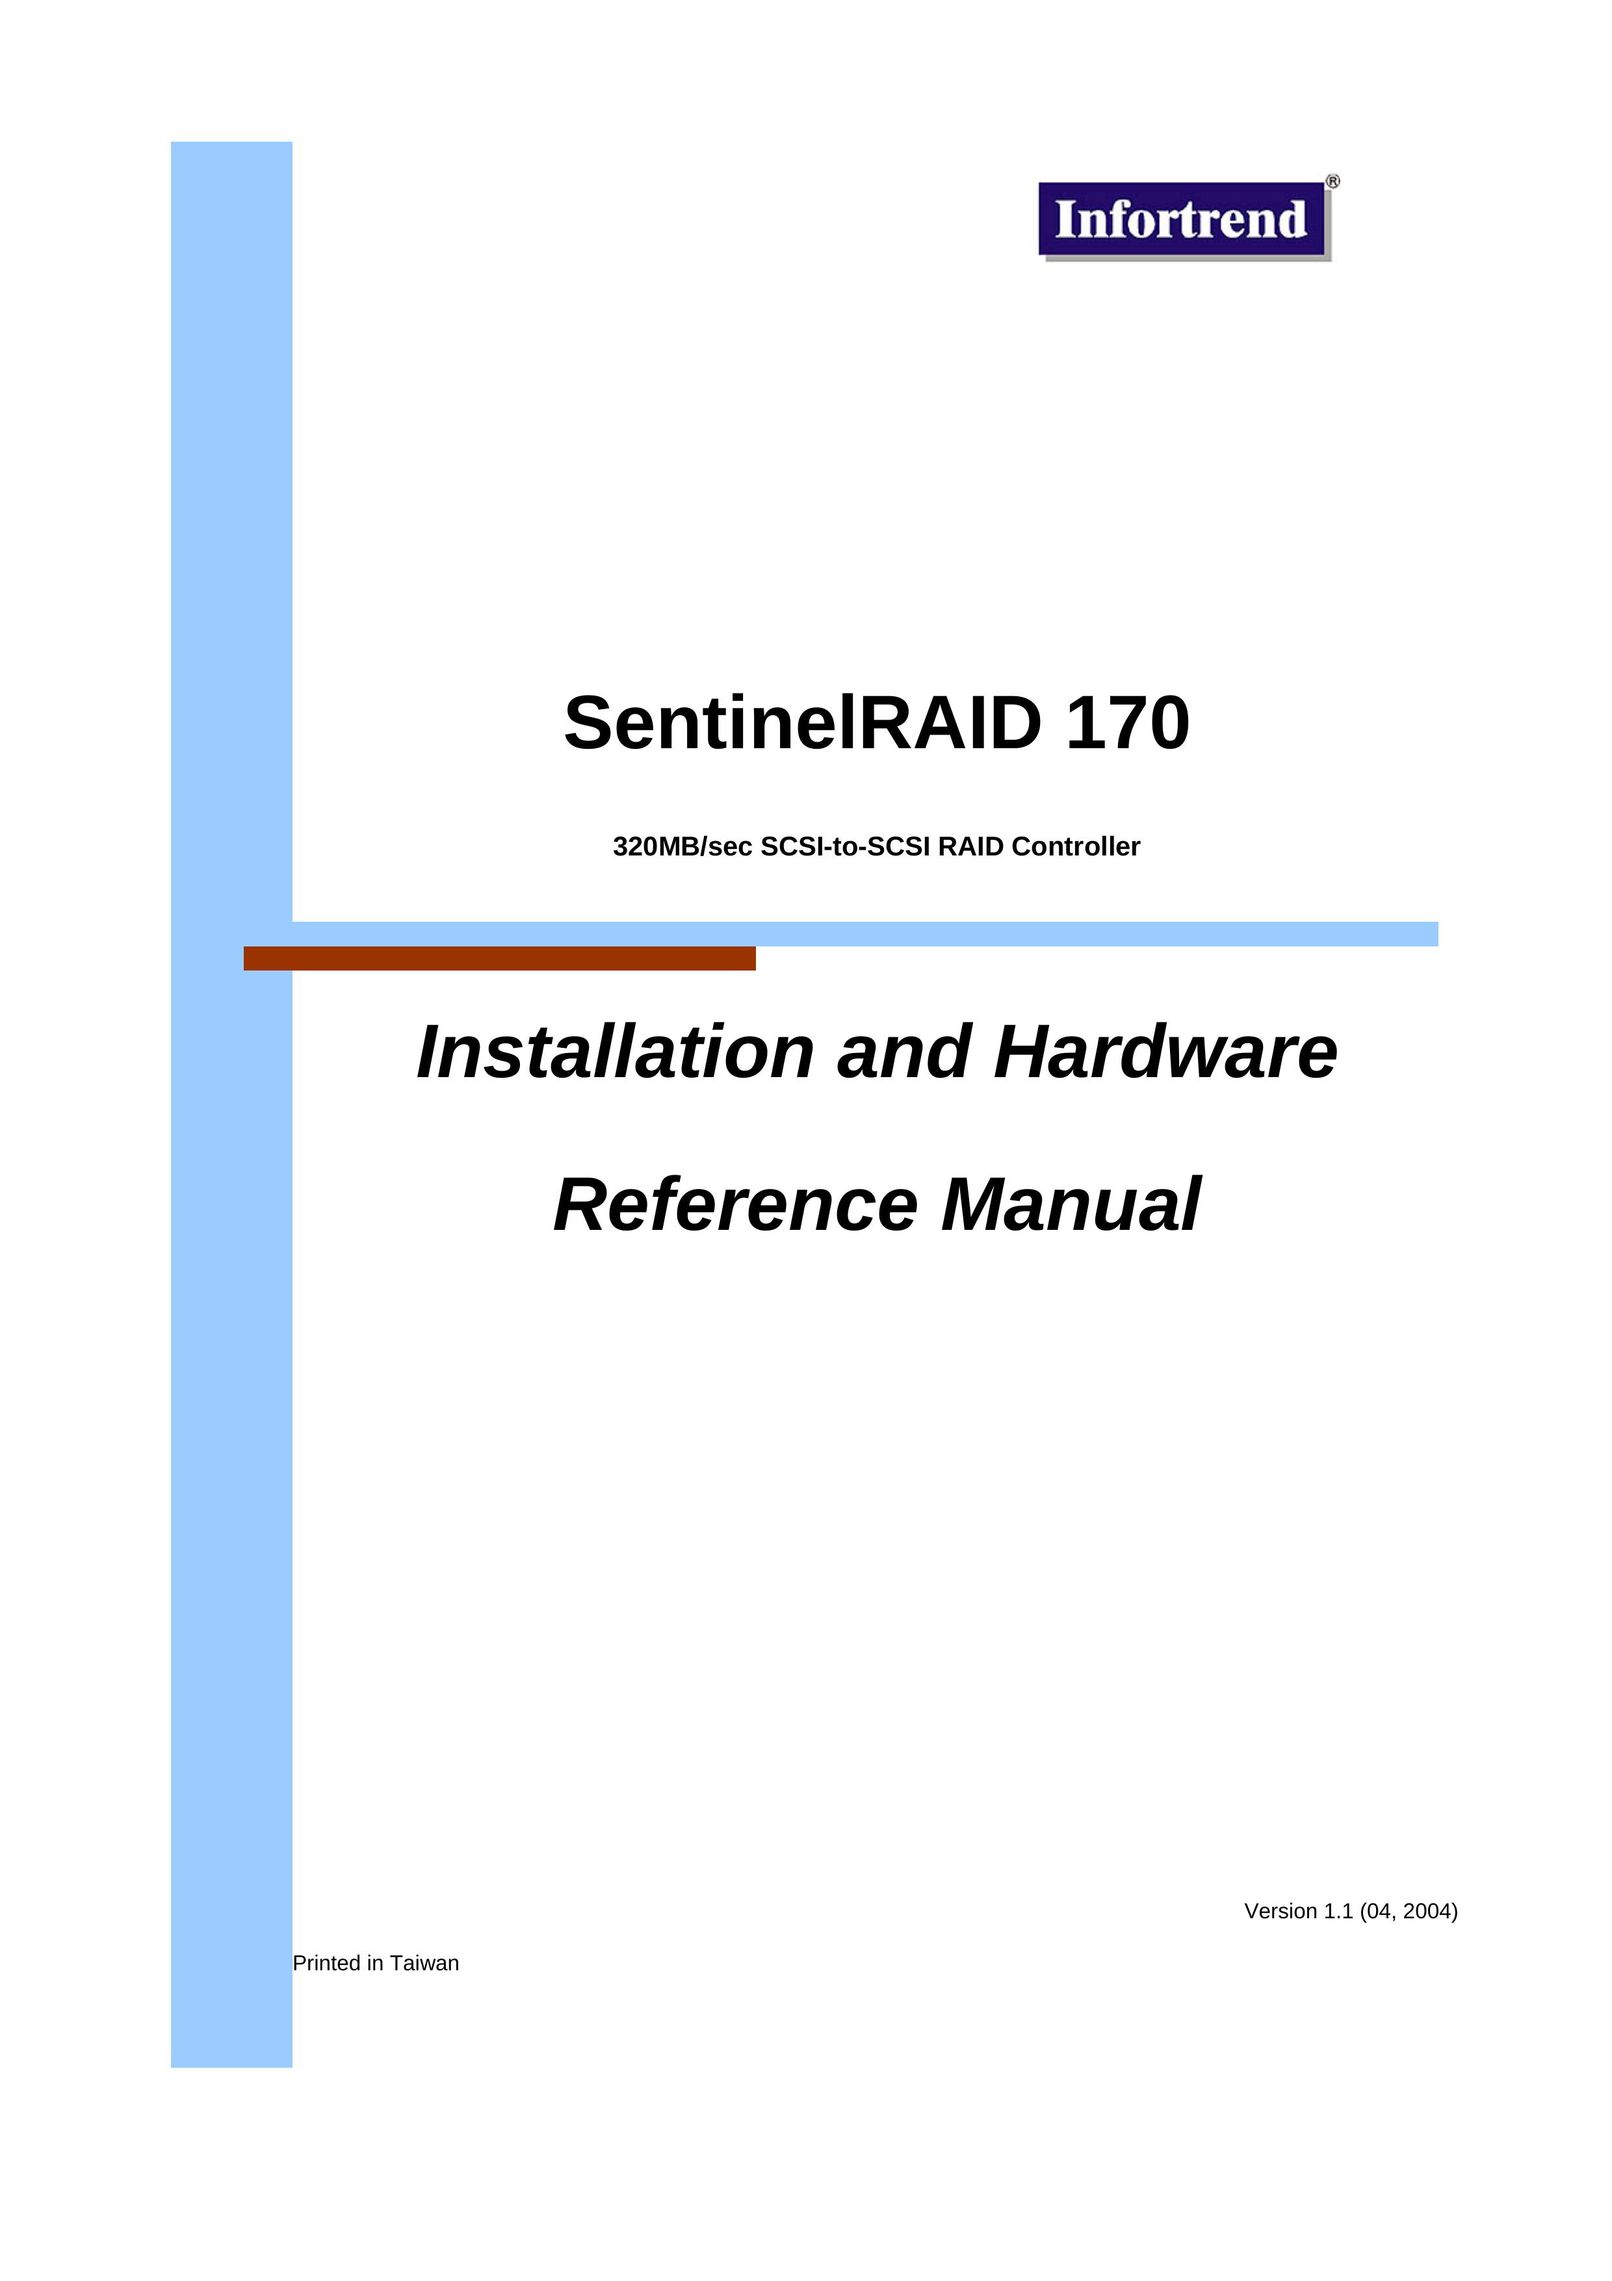 Infortrend SentinelRAID 170 320ML/sec SCSI-to-SCSI RAID Controller Video Game Controller User Manual